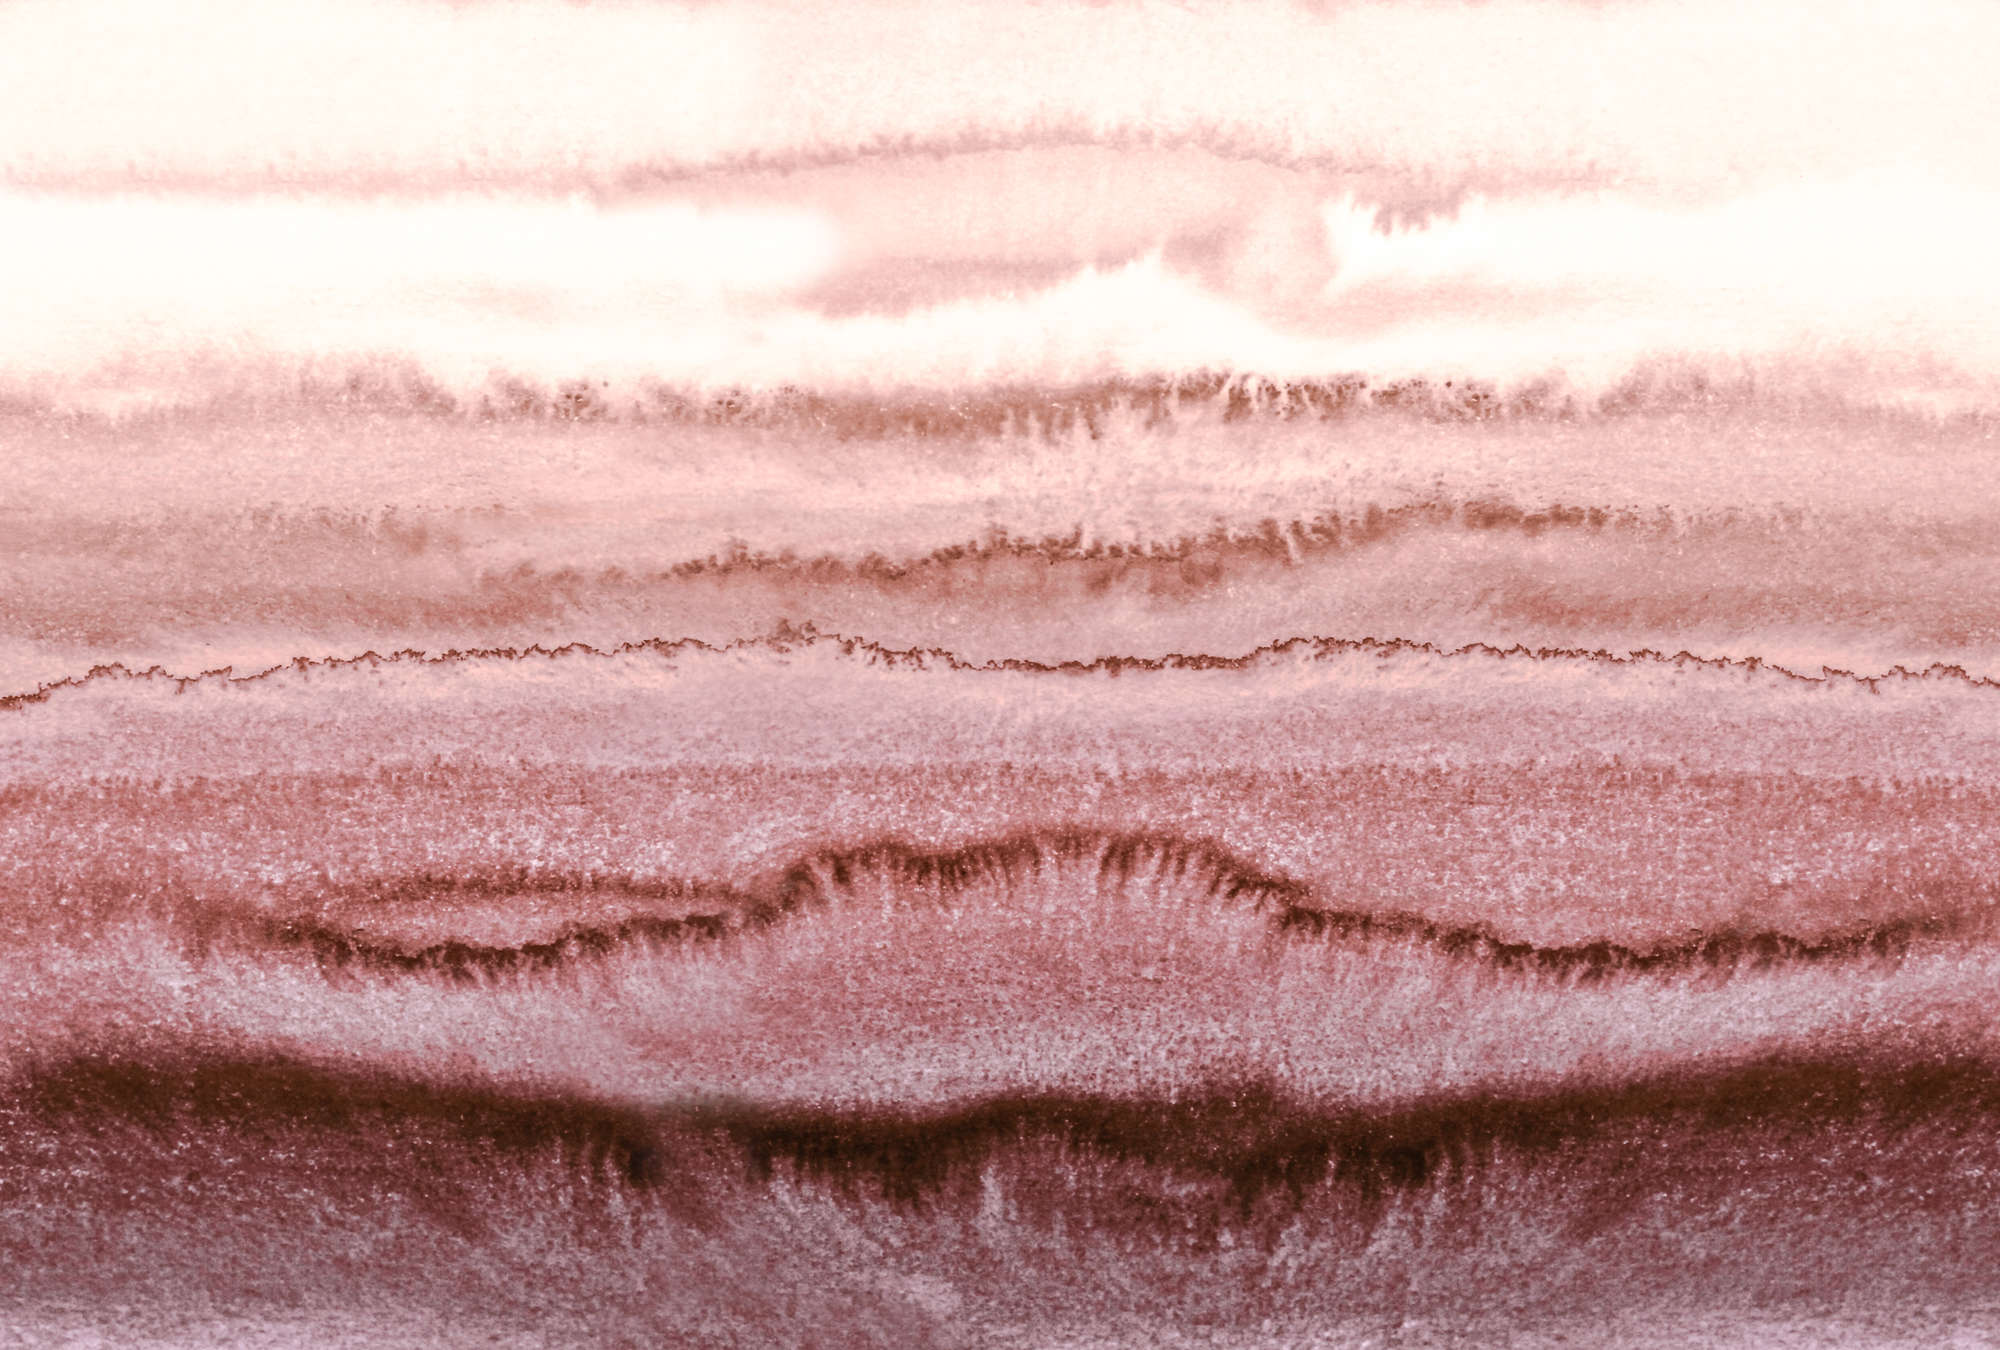             Aquarell Fototapete abstrakt mit Farbverlauf in Rosé
        